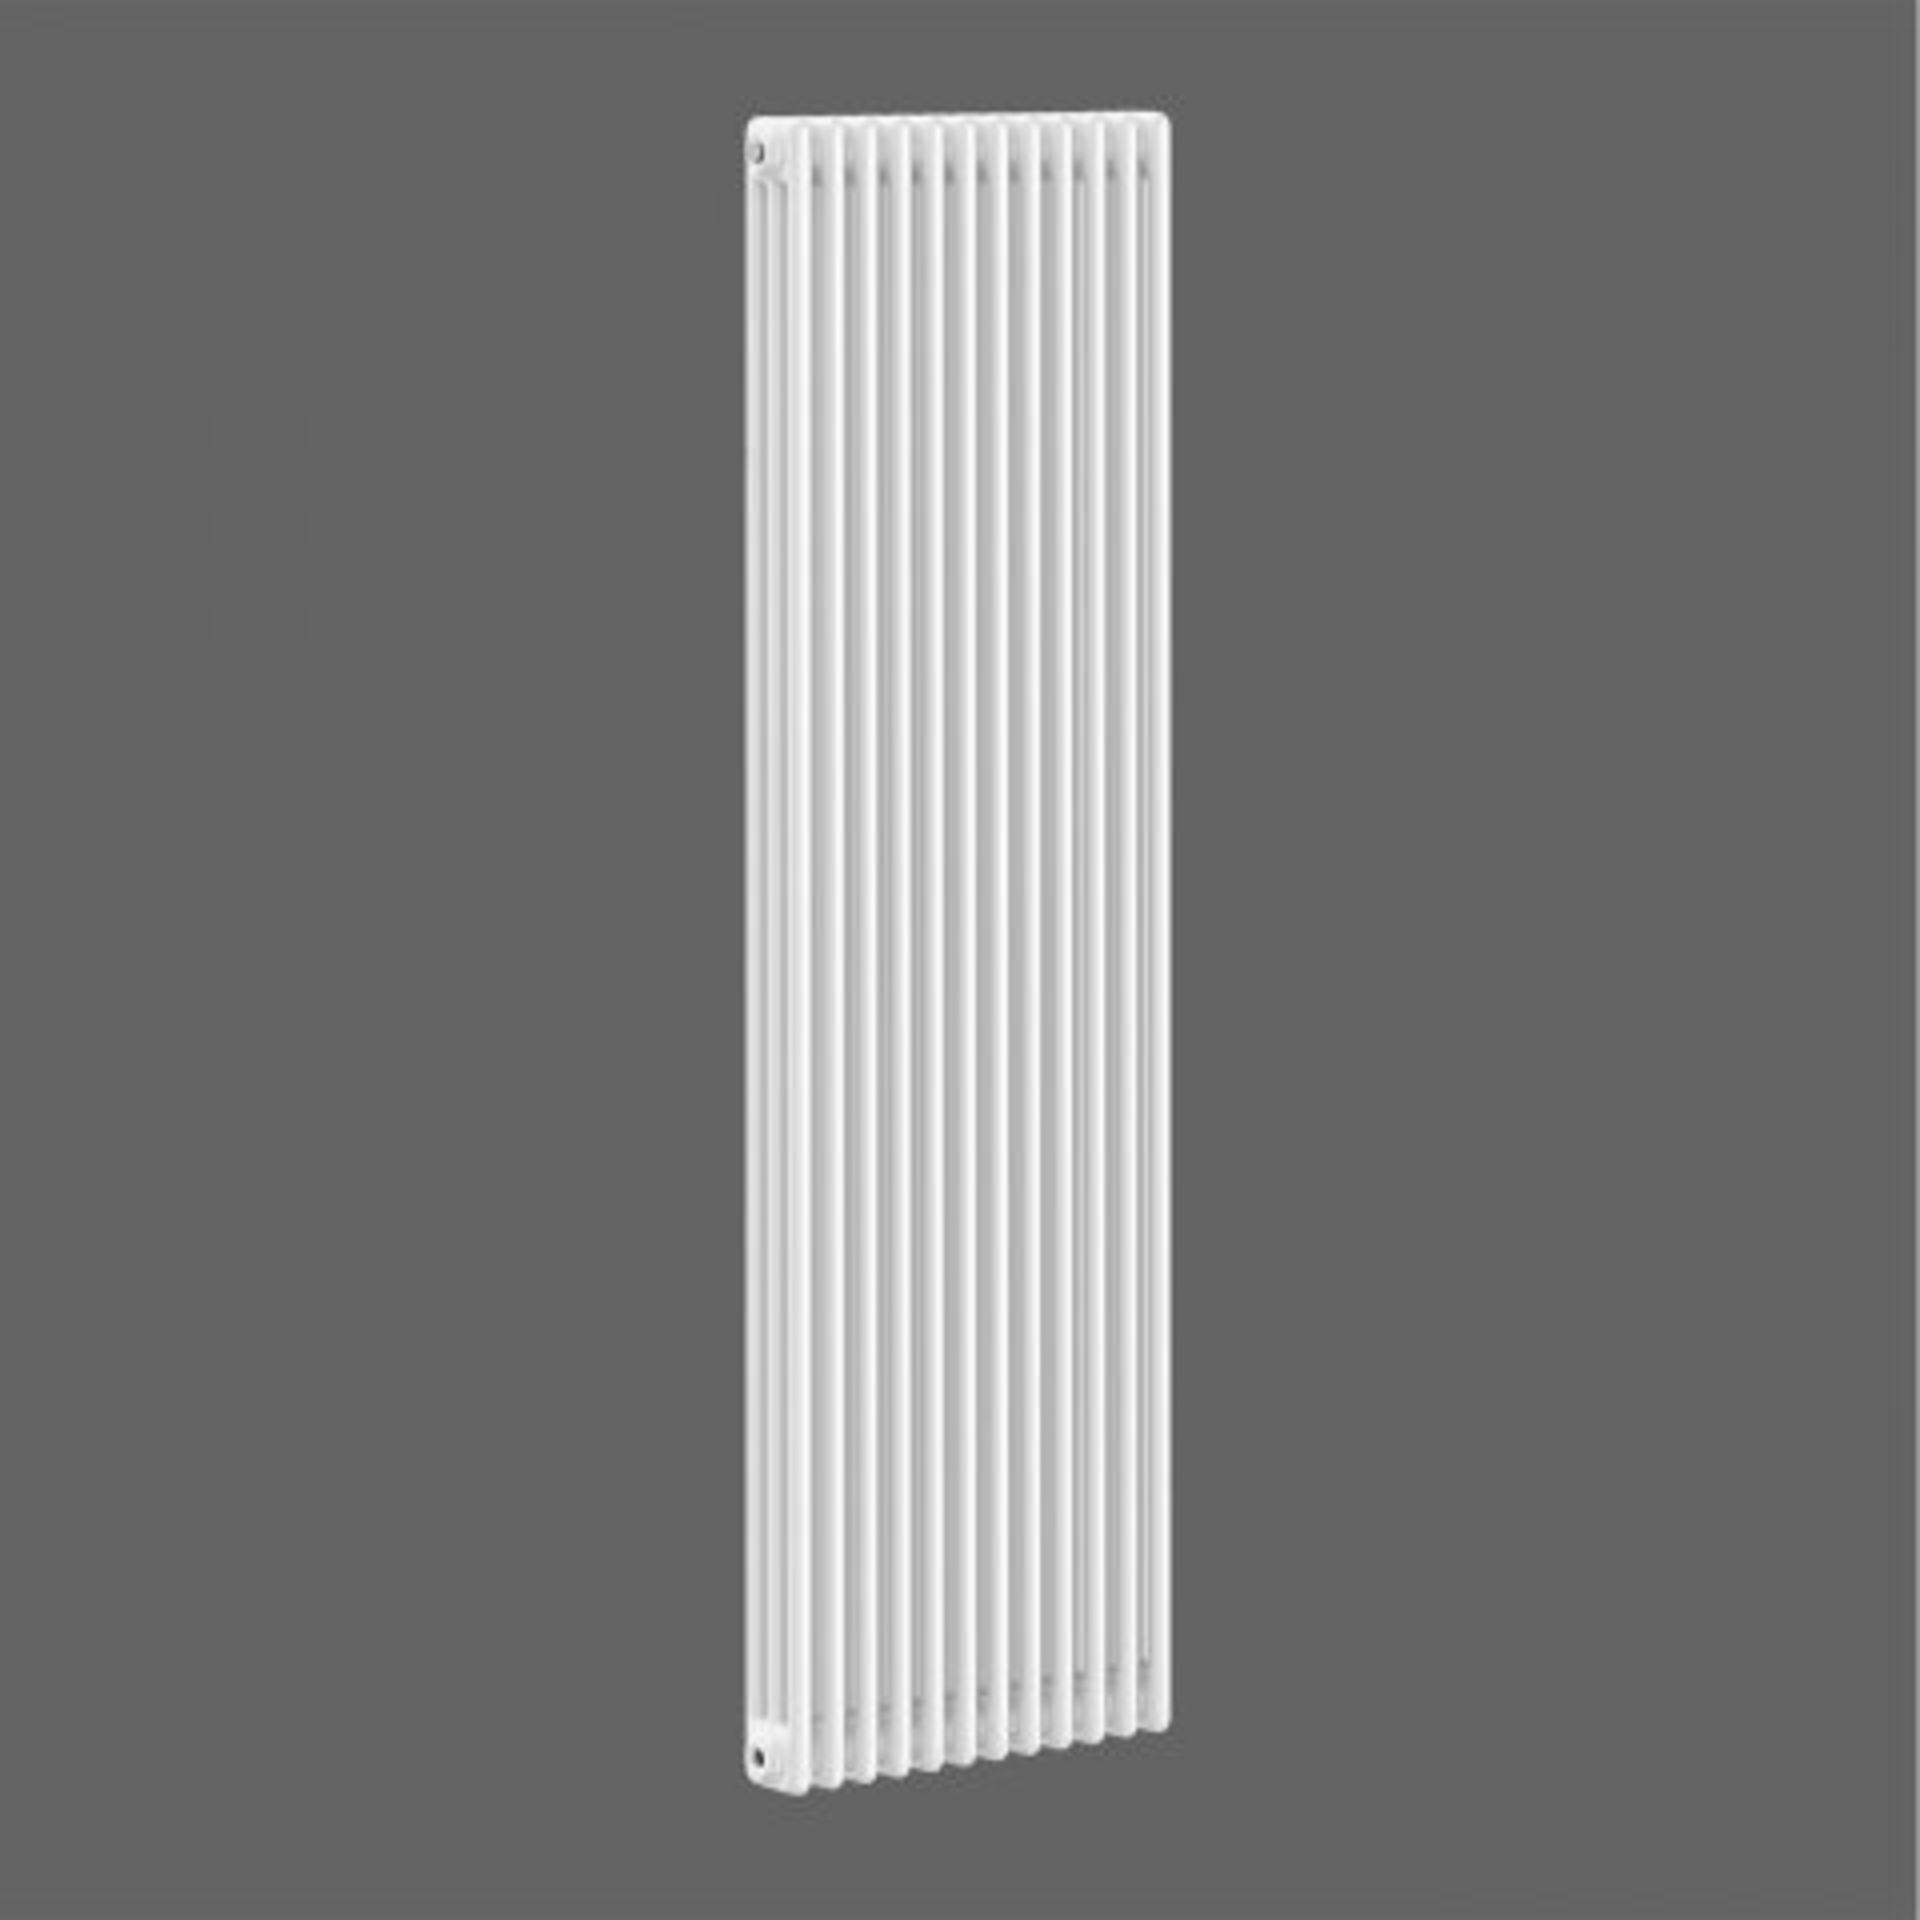 (L45) 1800x554mm White Triple Panel Vertical Colosseum Radiator - Roma Premium. RRP £599.99. Classic - Image 2 of 3